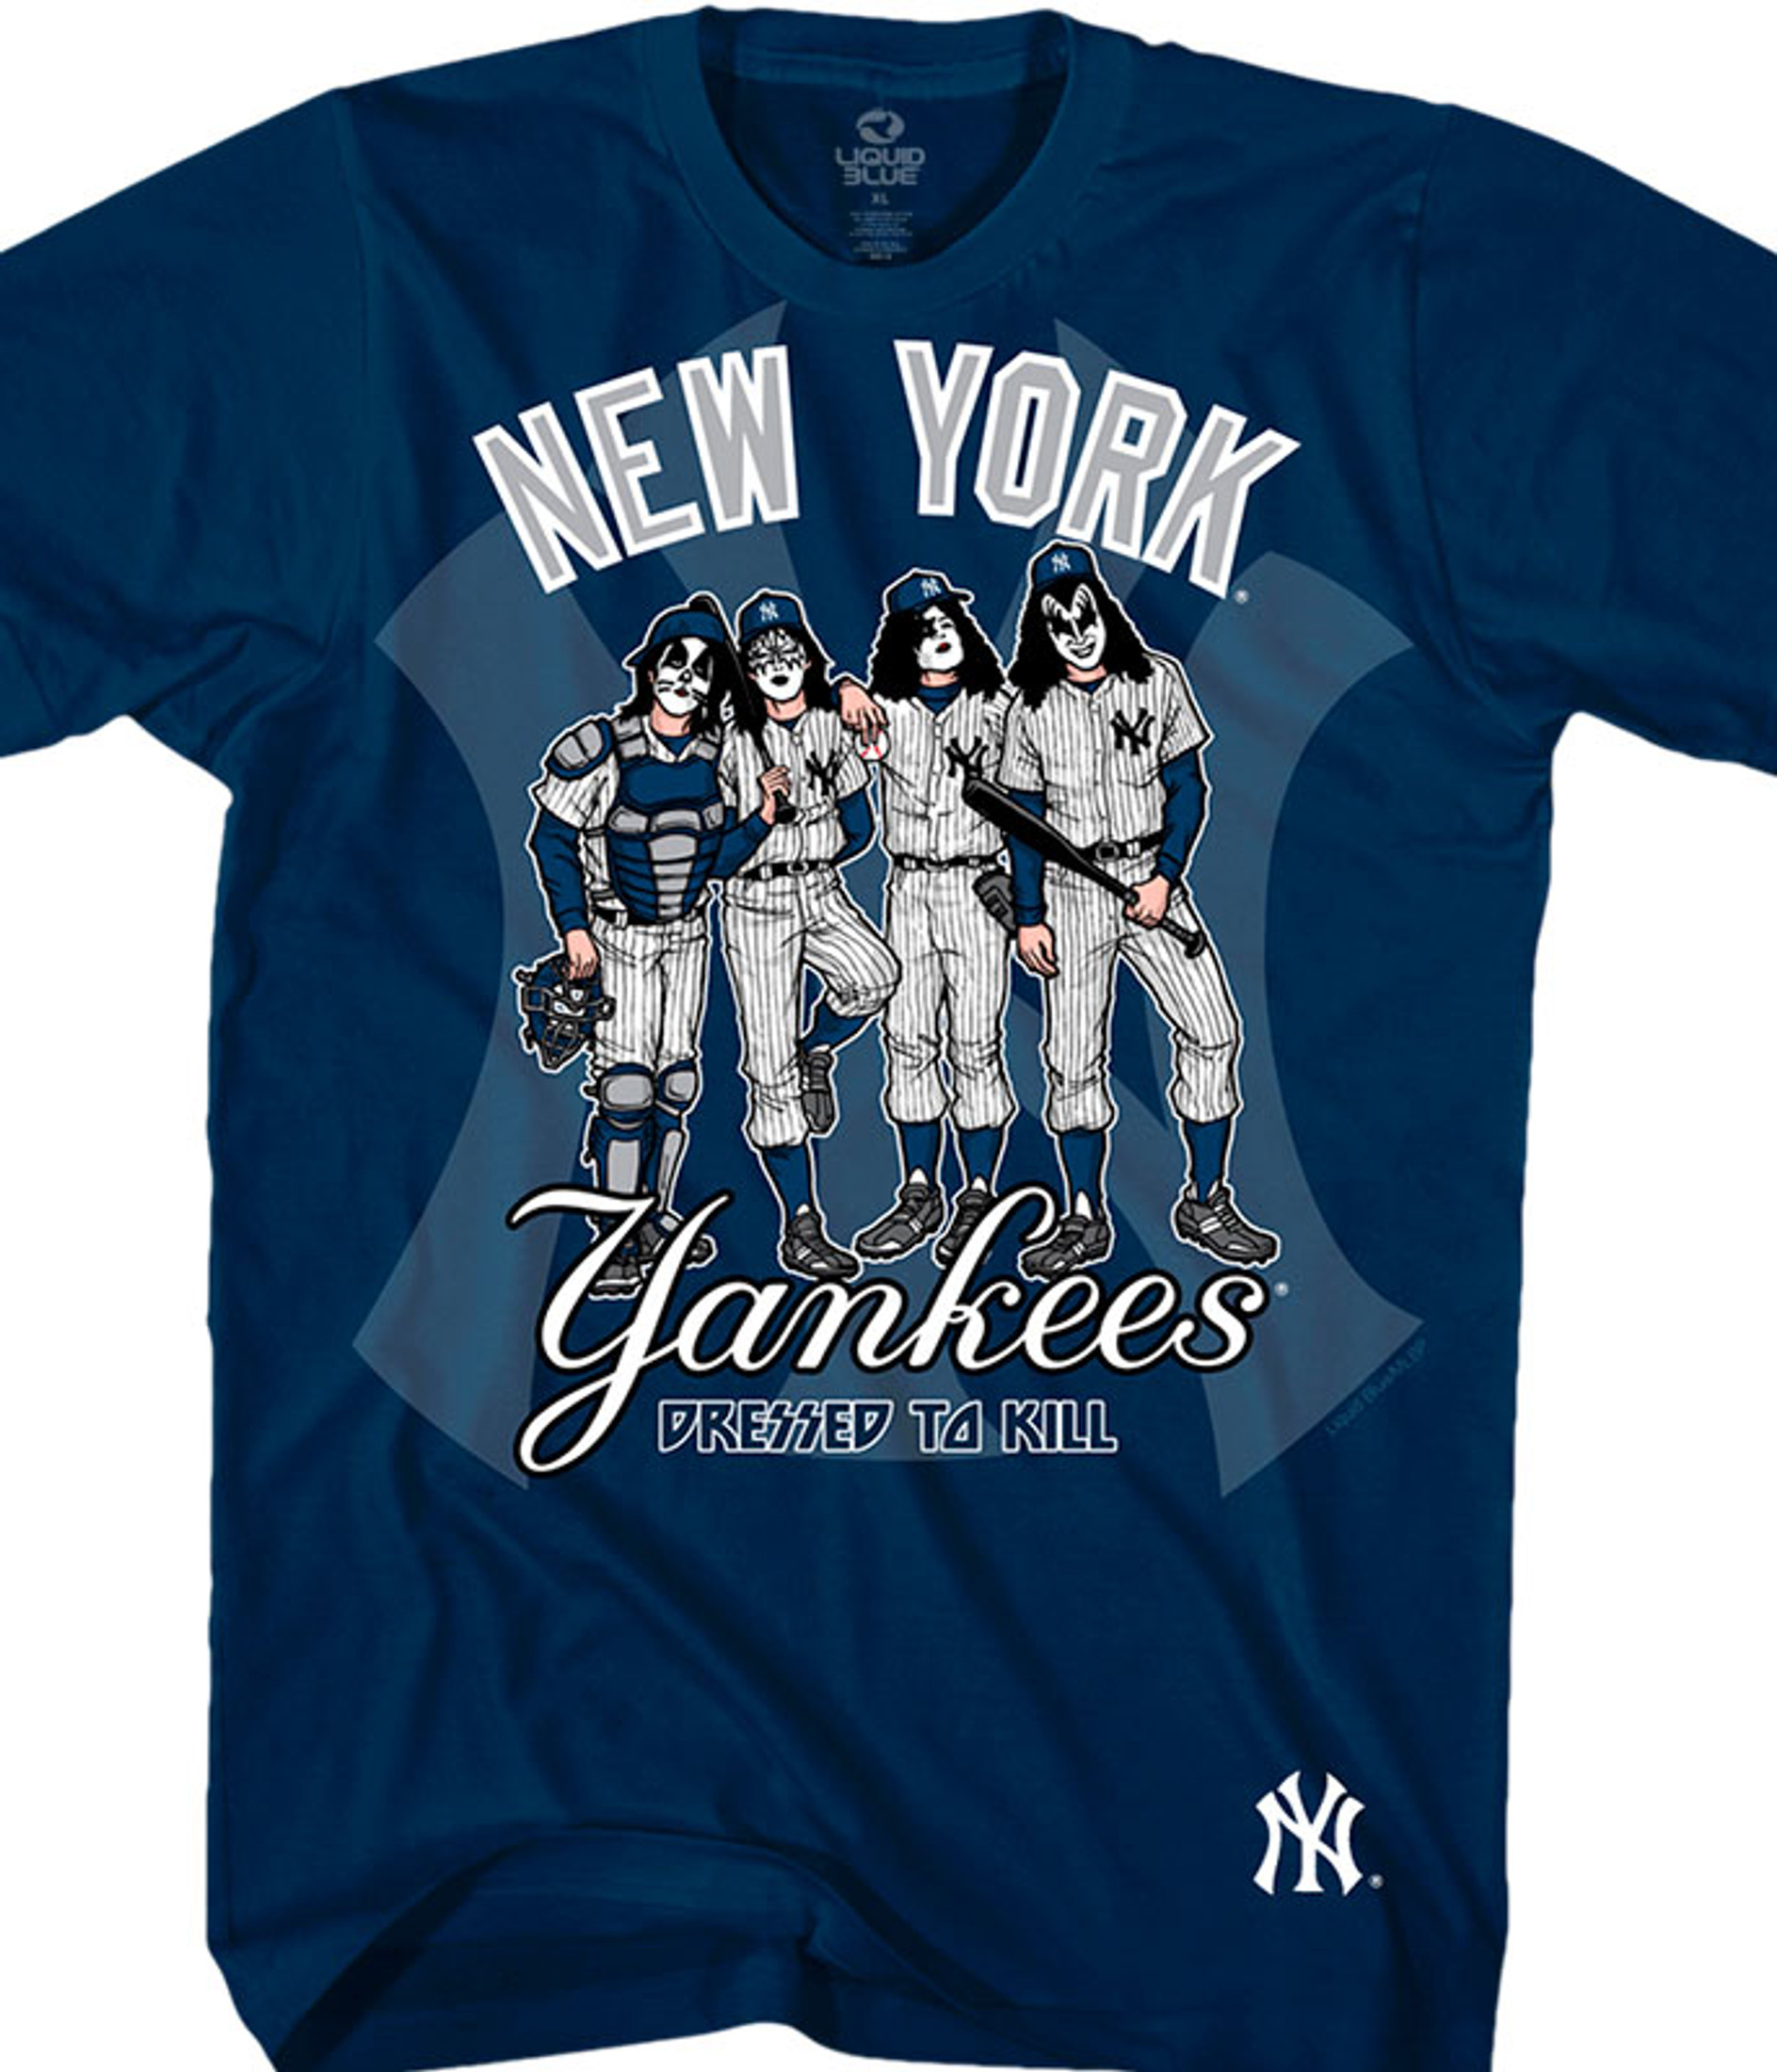 MLB New Era New York Yankees x Major League Baseball Tshirt White  The  Factory KL